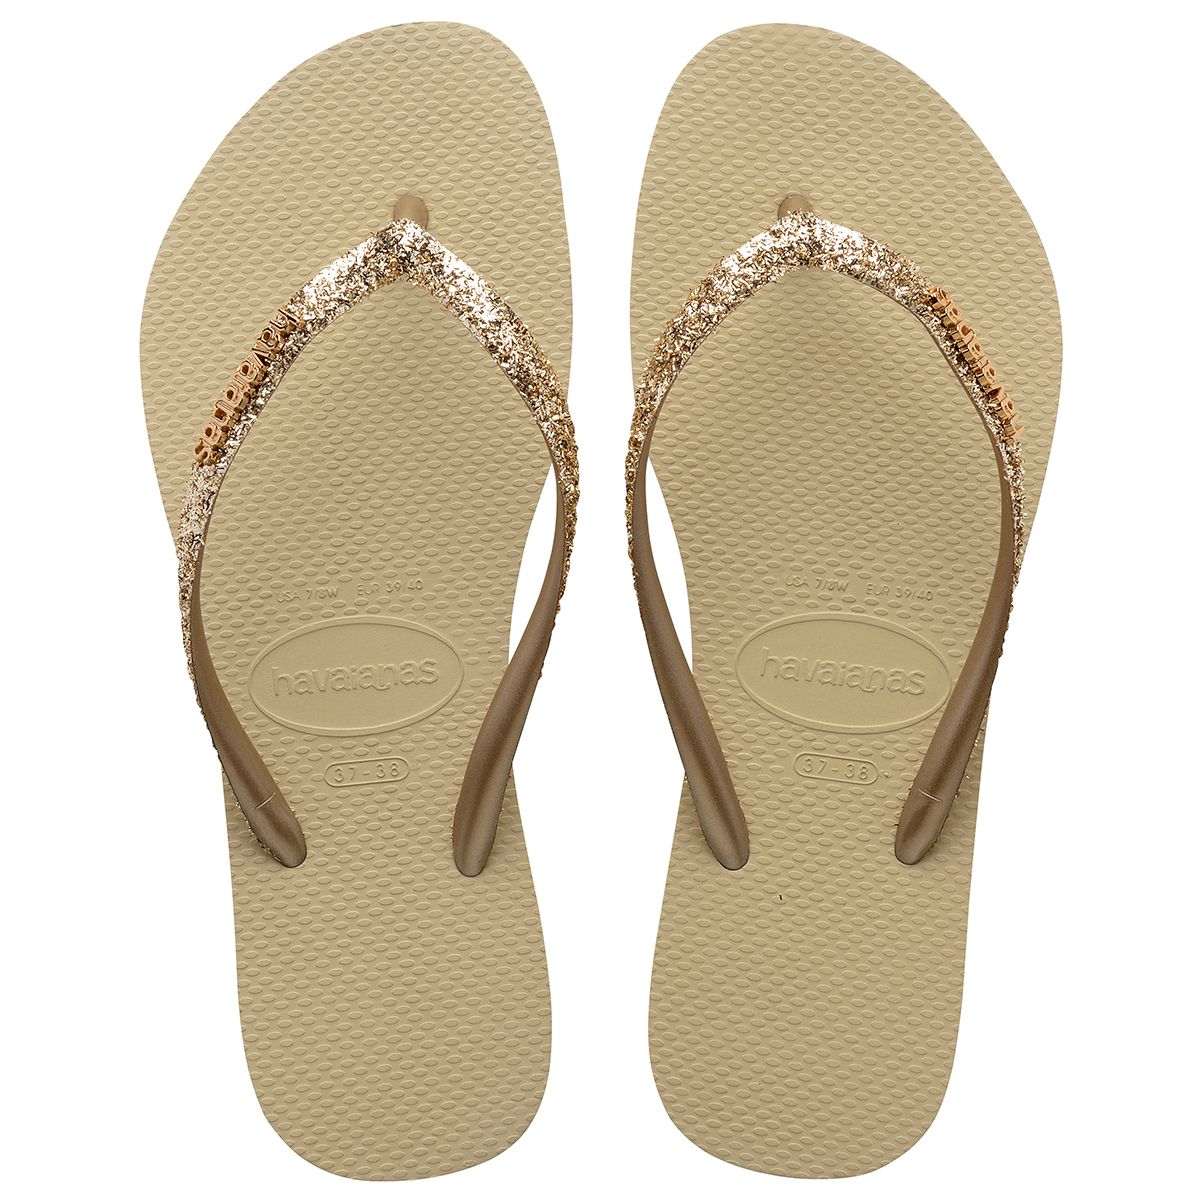 Havaianas Slim Glitter 2 Womens Sandal 0154-Sand Grey 6